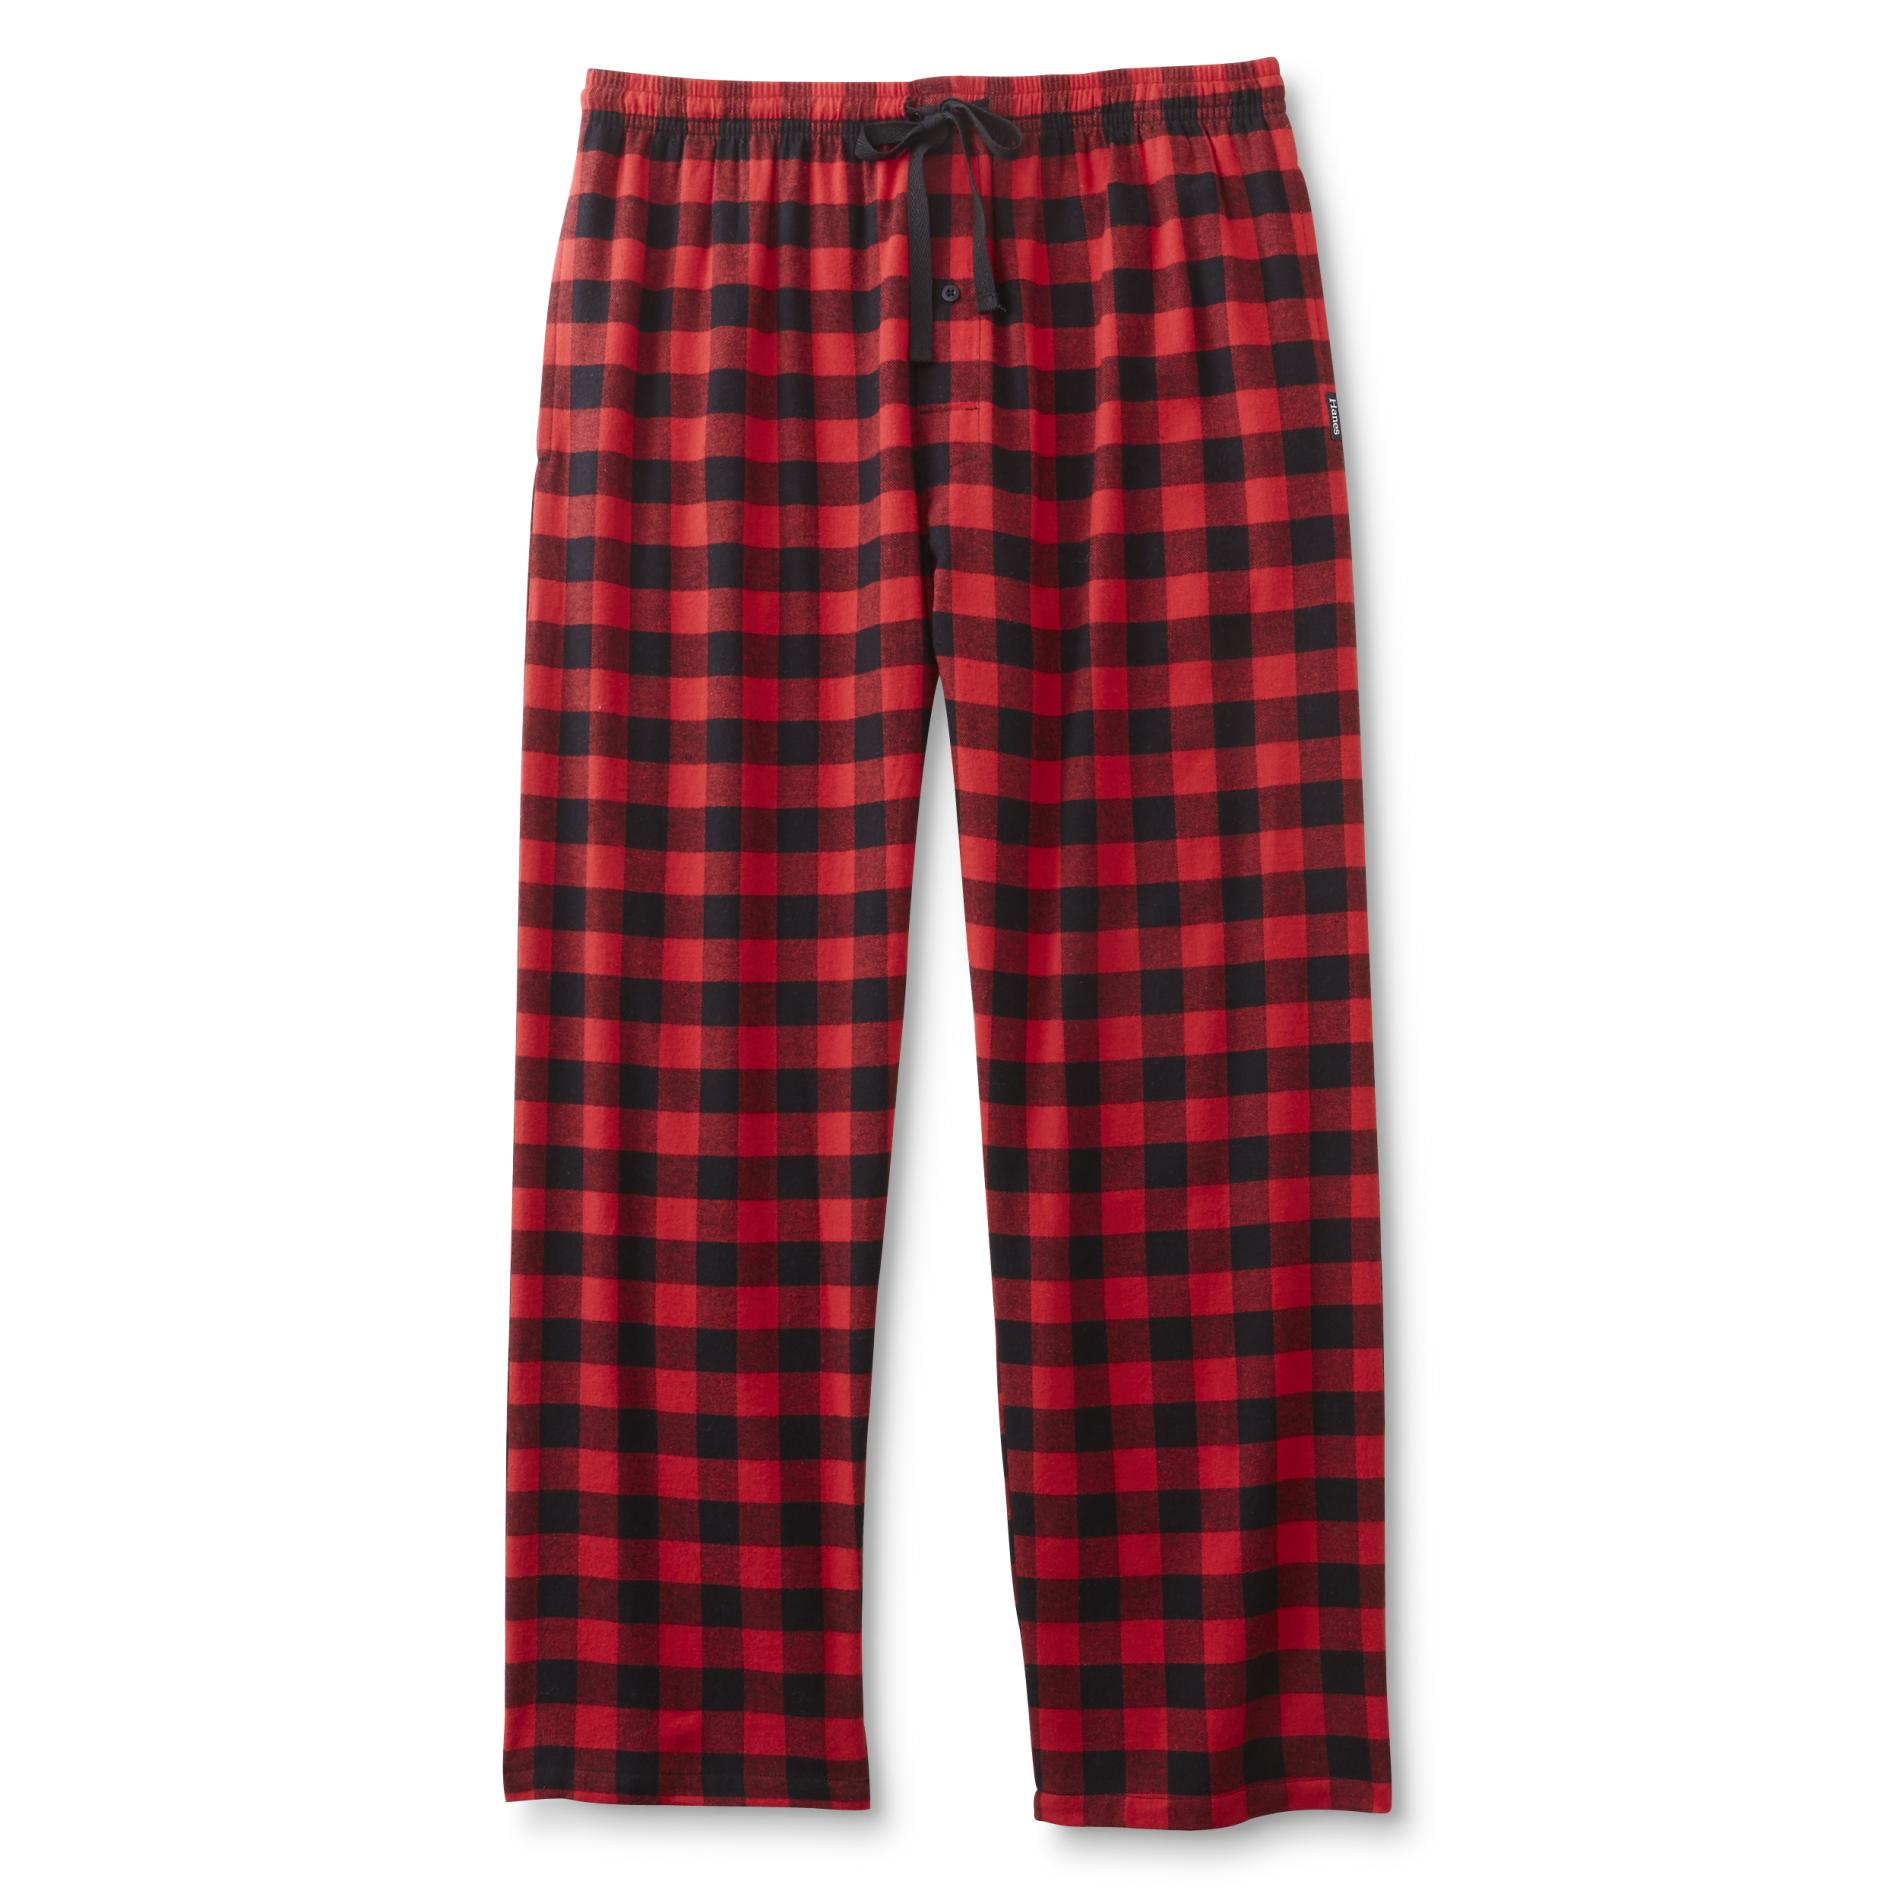 Hanes Men's Flannel Pajama Pants - Buffalo Check